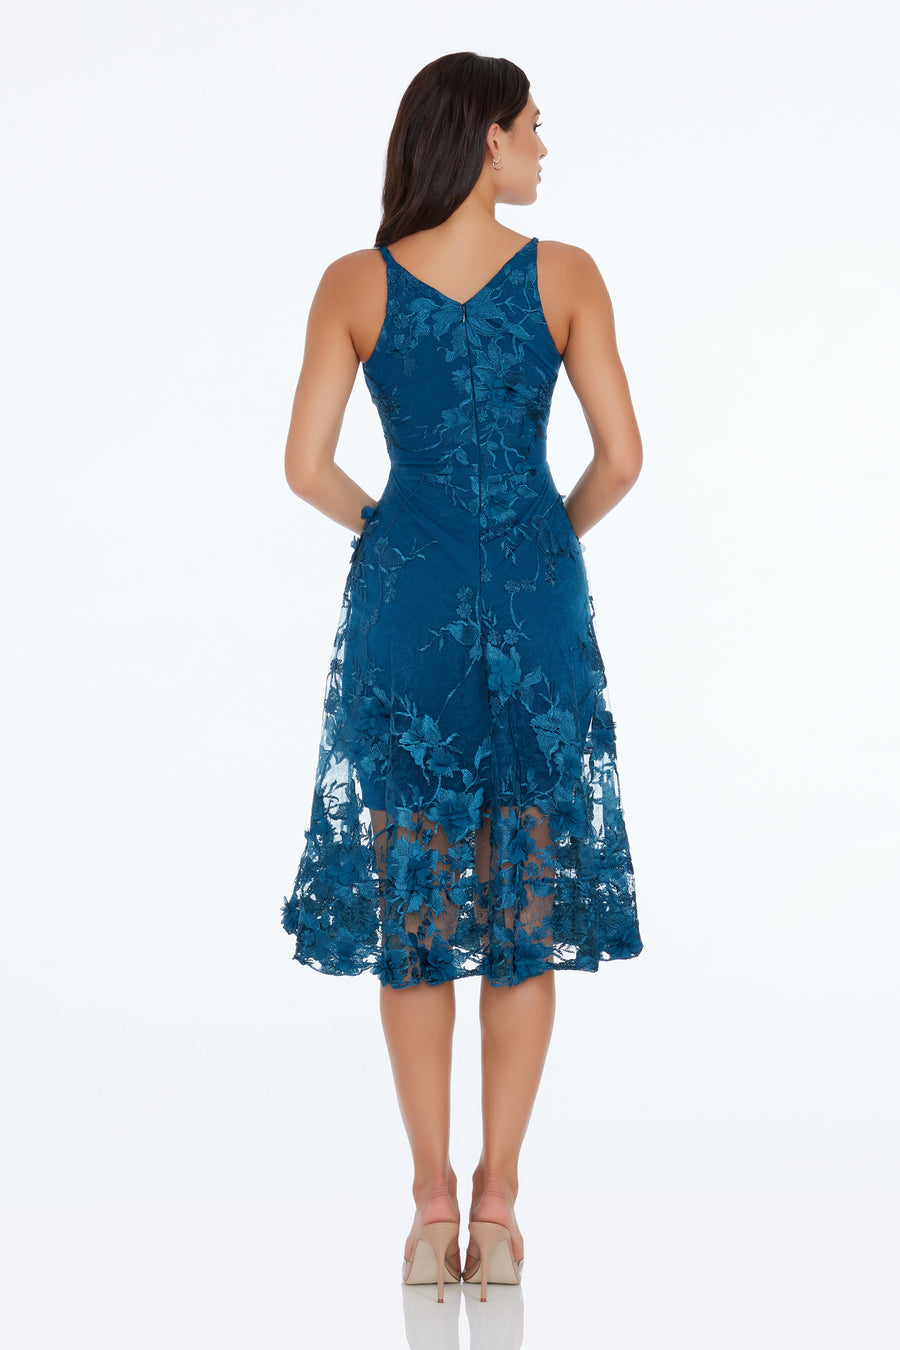 Audrey Dress / PEACOCK BLUE